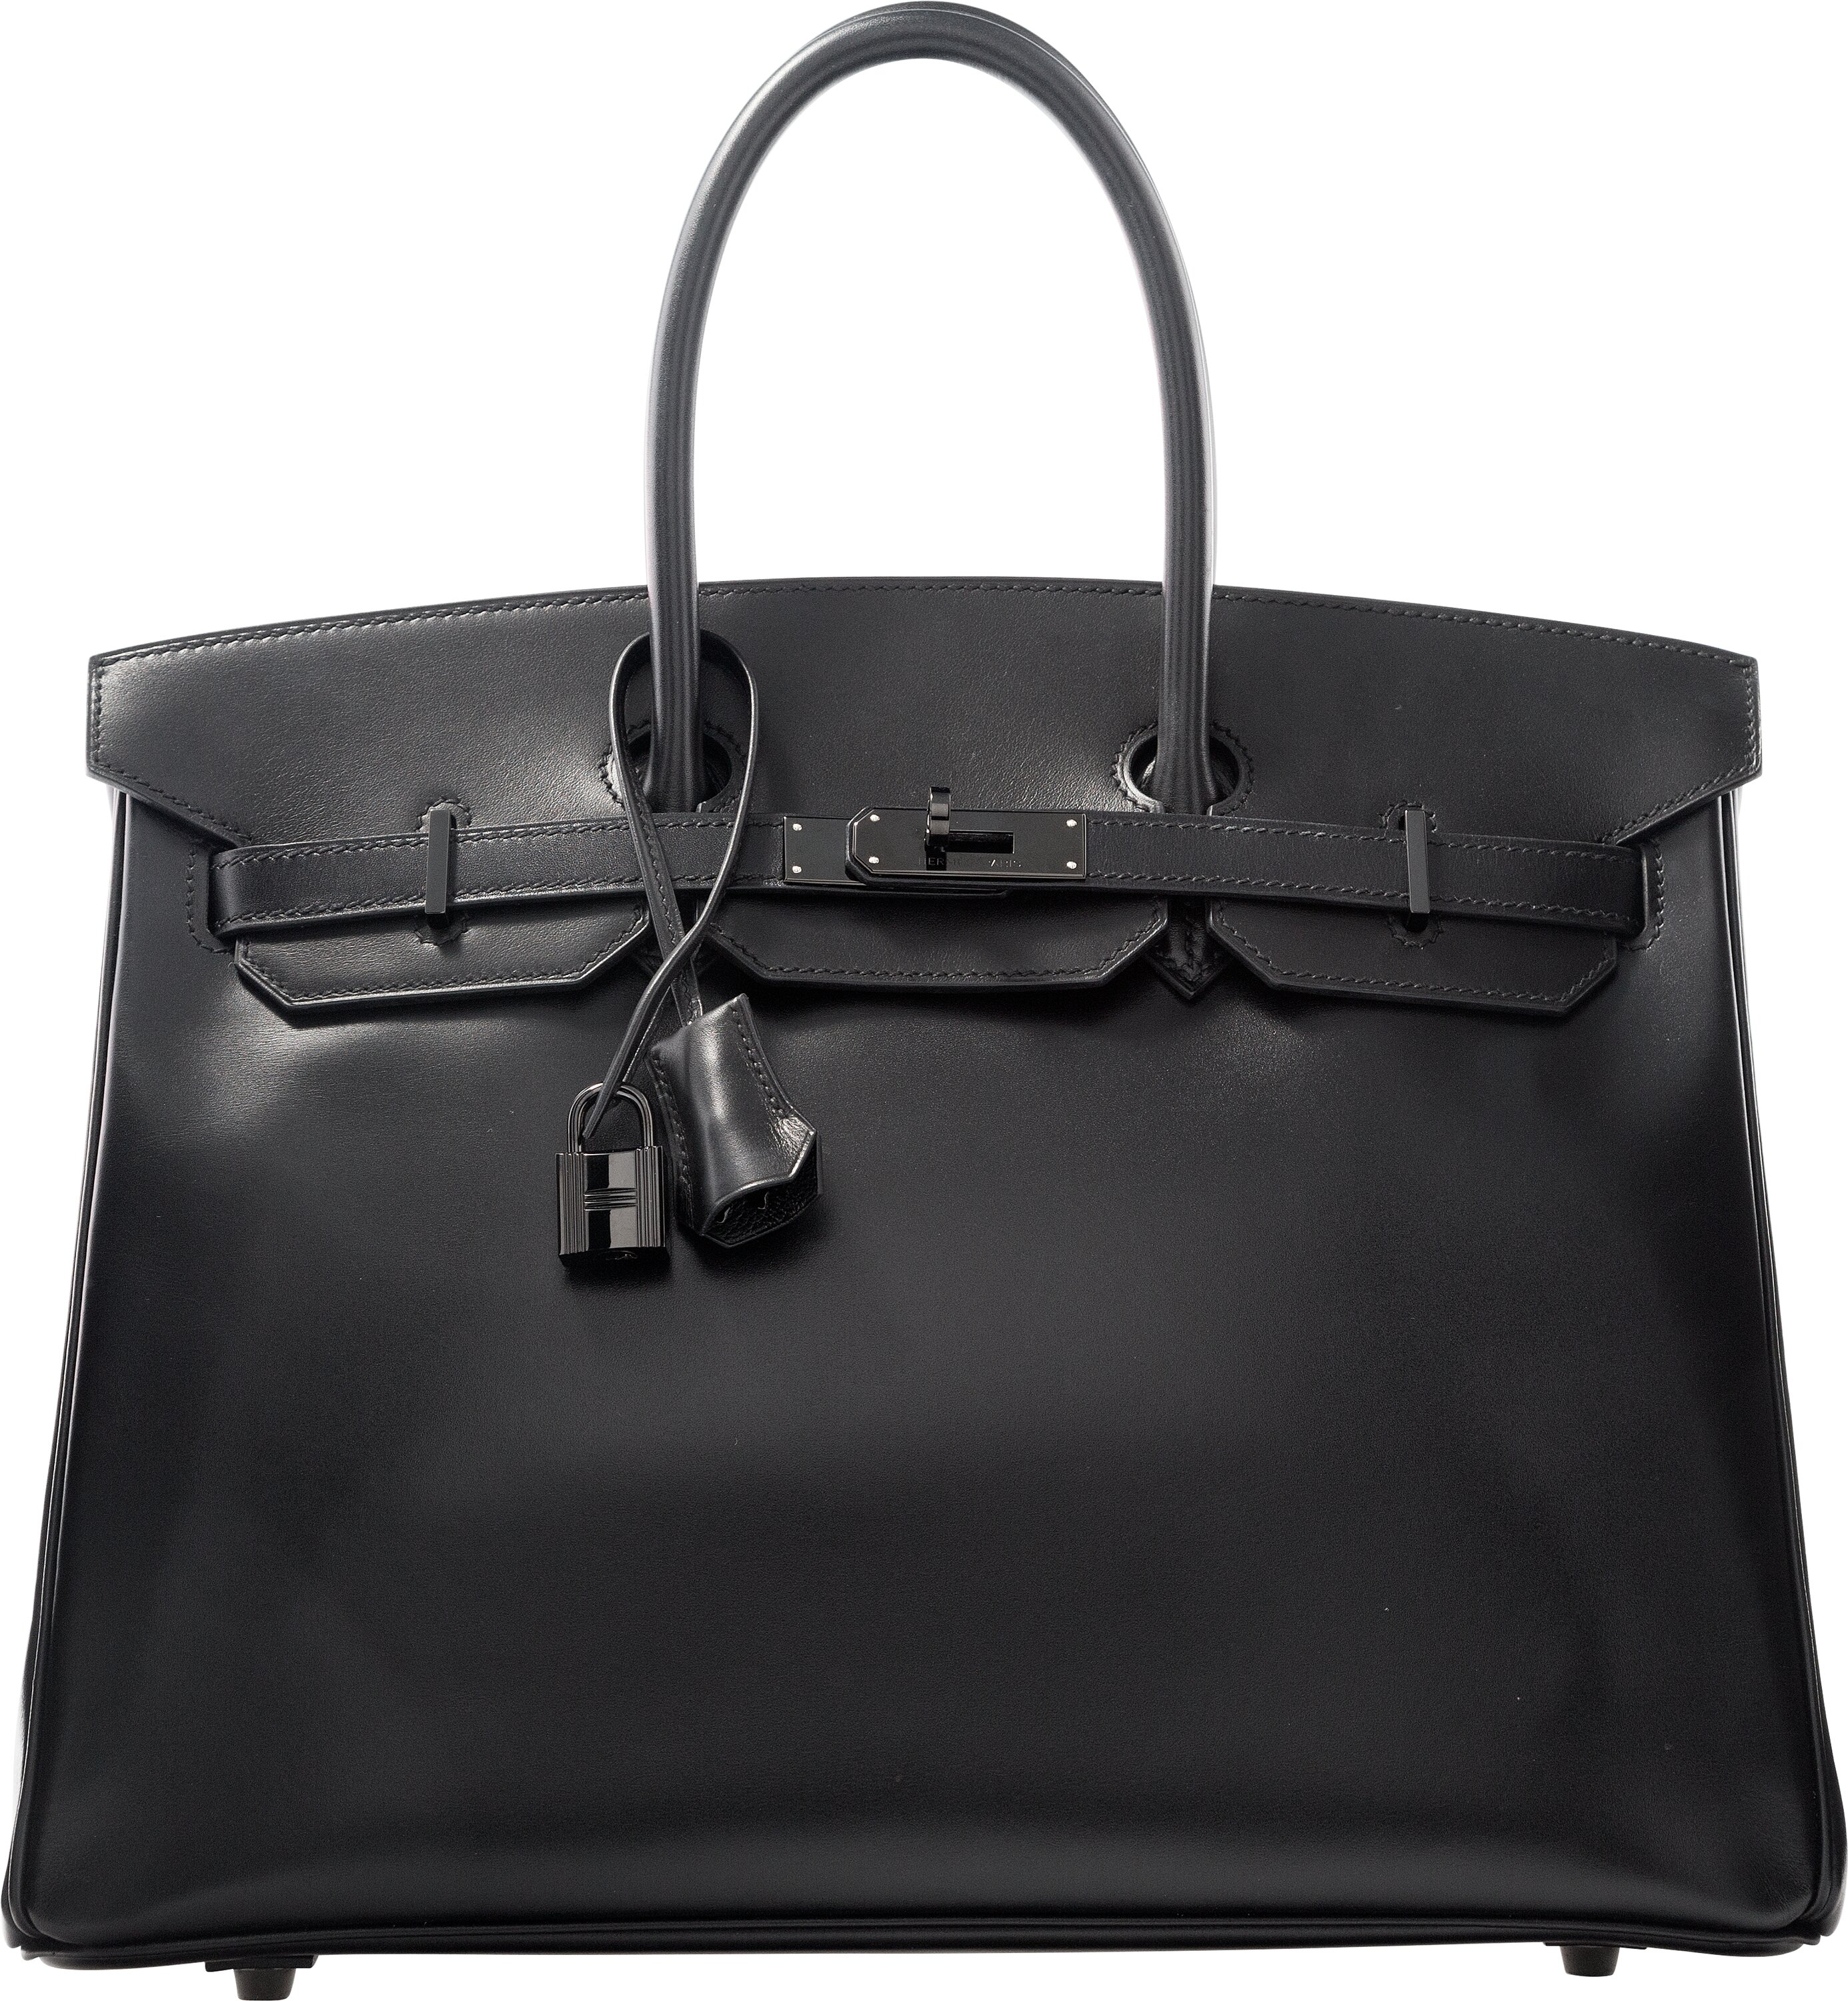 Hermes Limited Edition 35cm So Black Calf Box Leather Birkin Bag | Lot ...